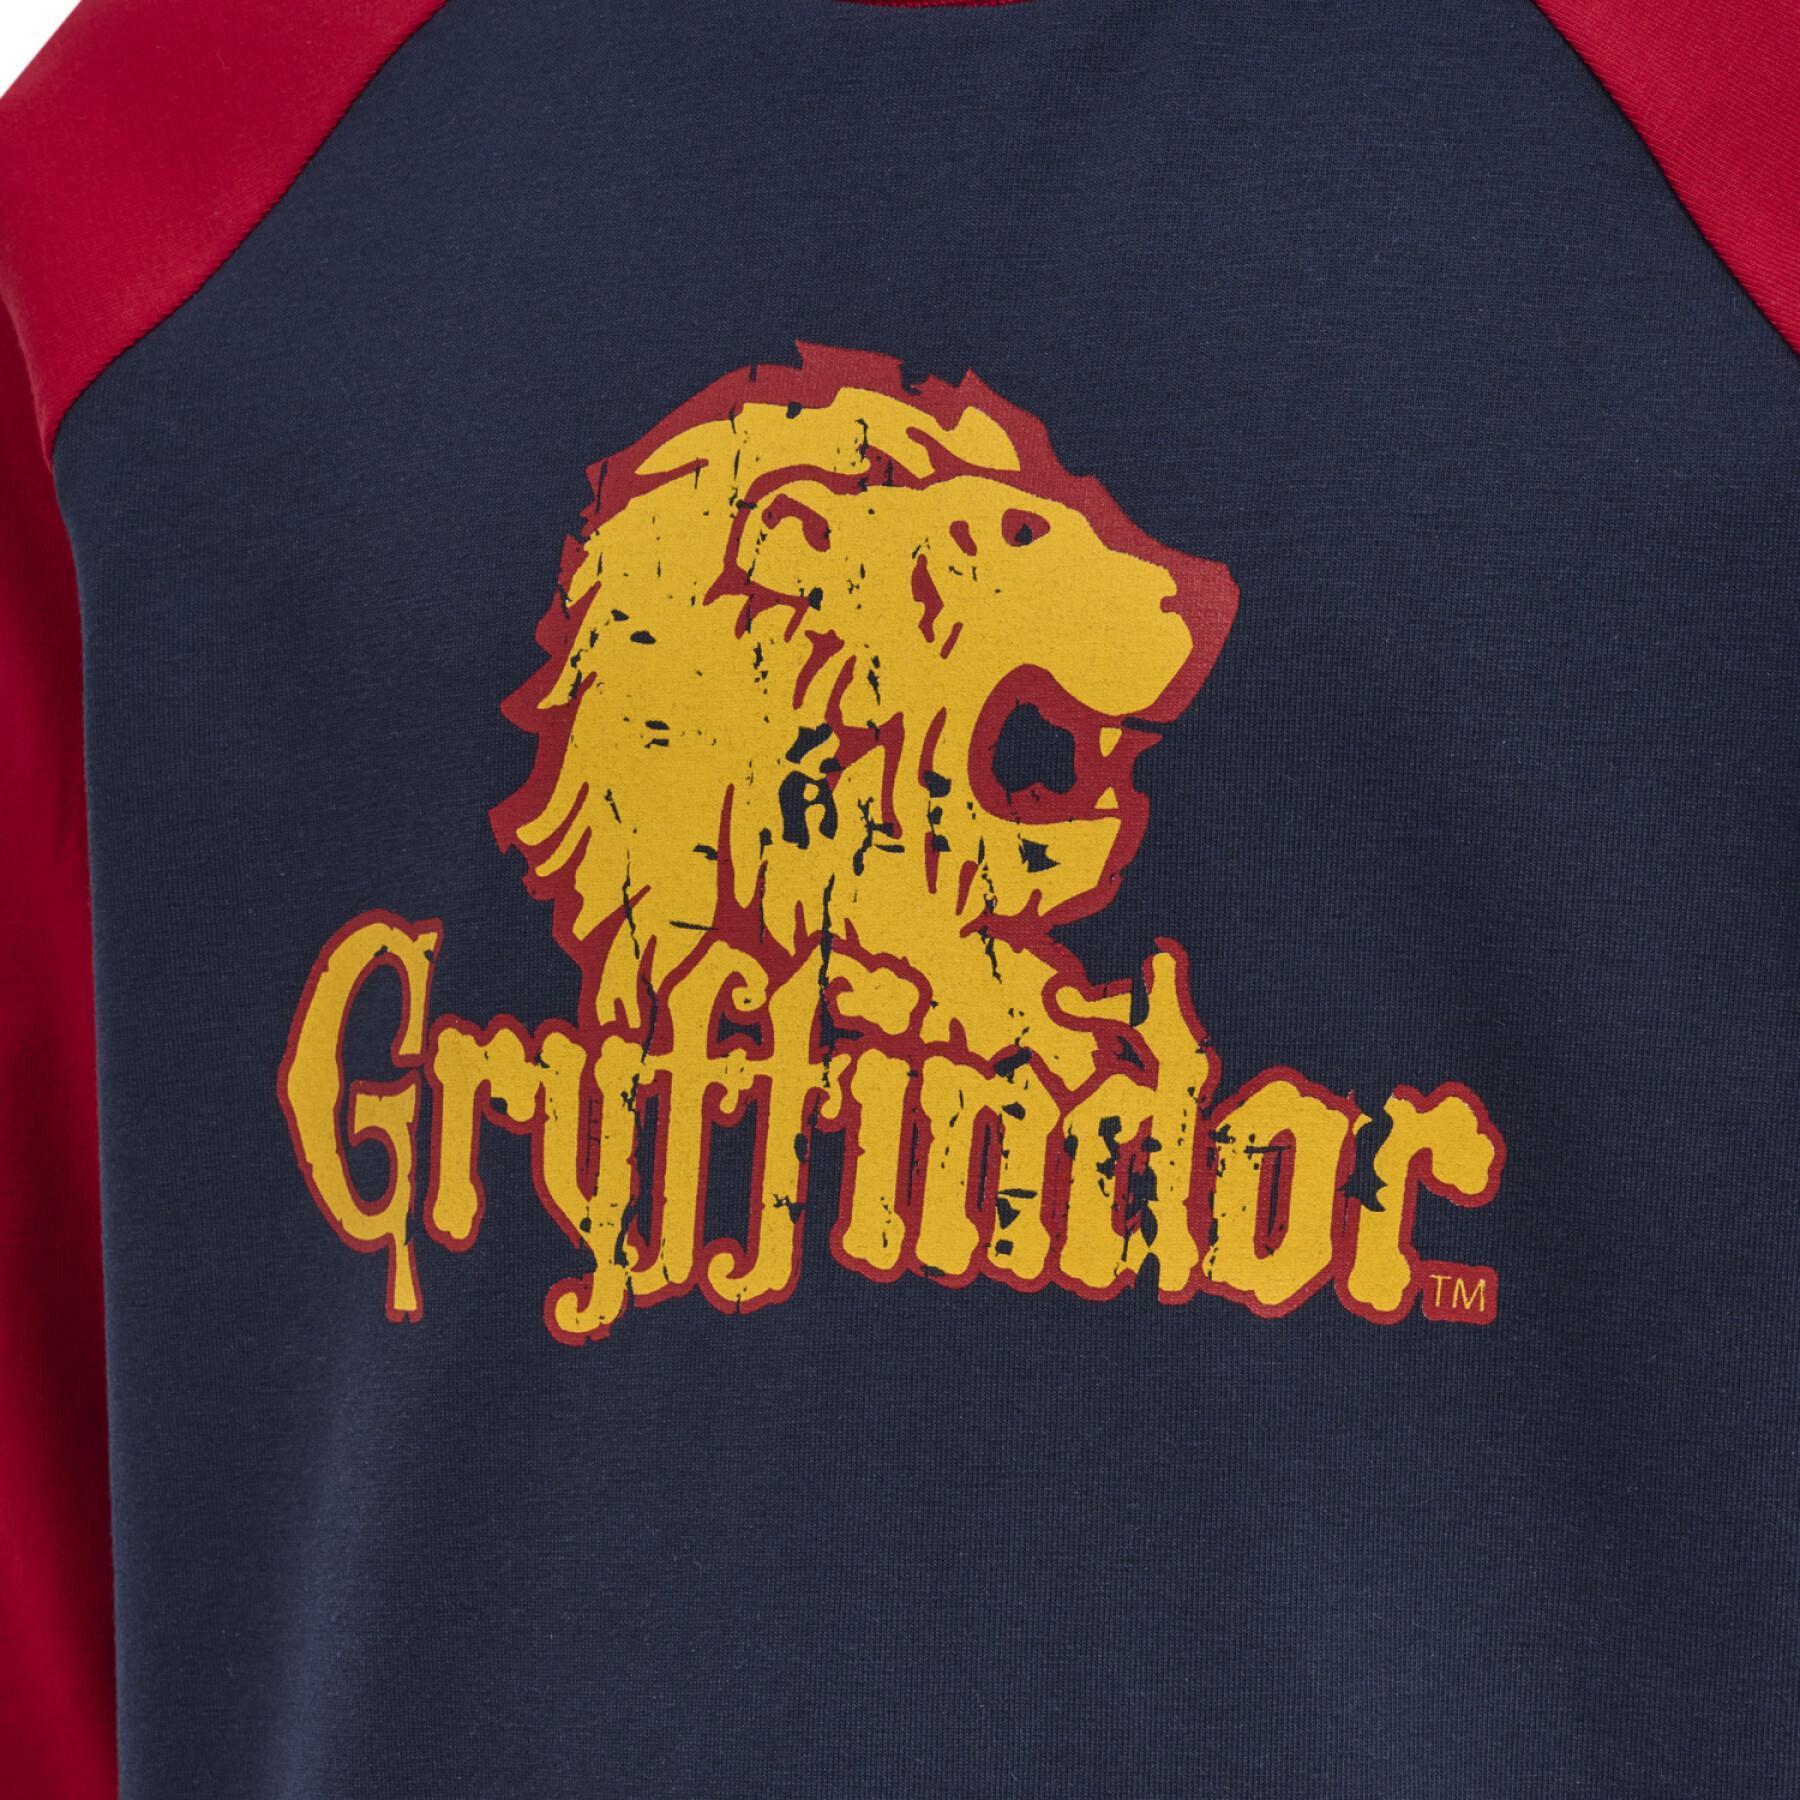 T-shirt de manga comprida para crianças Hummel Harry Potter